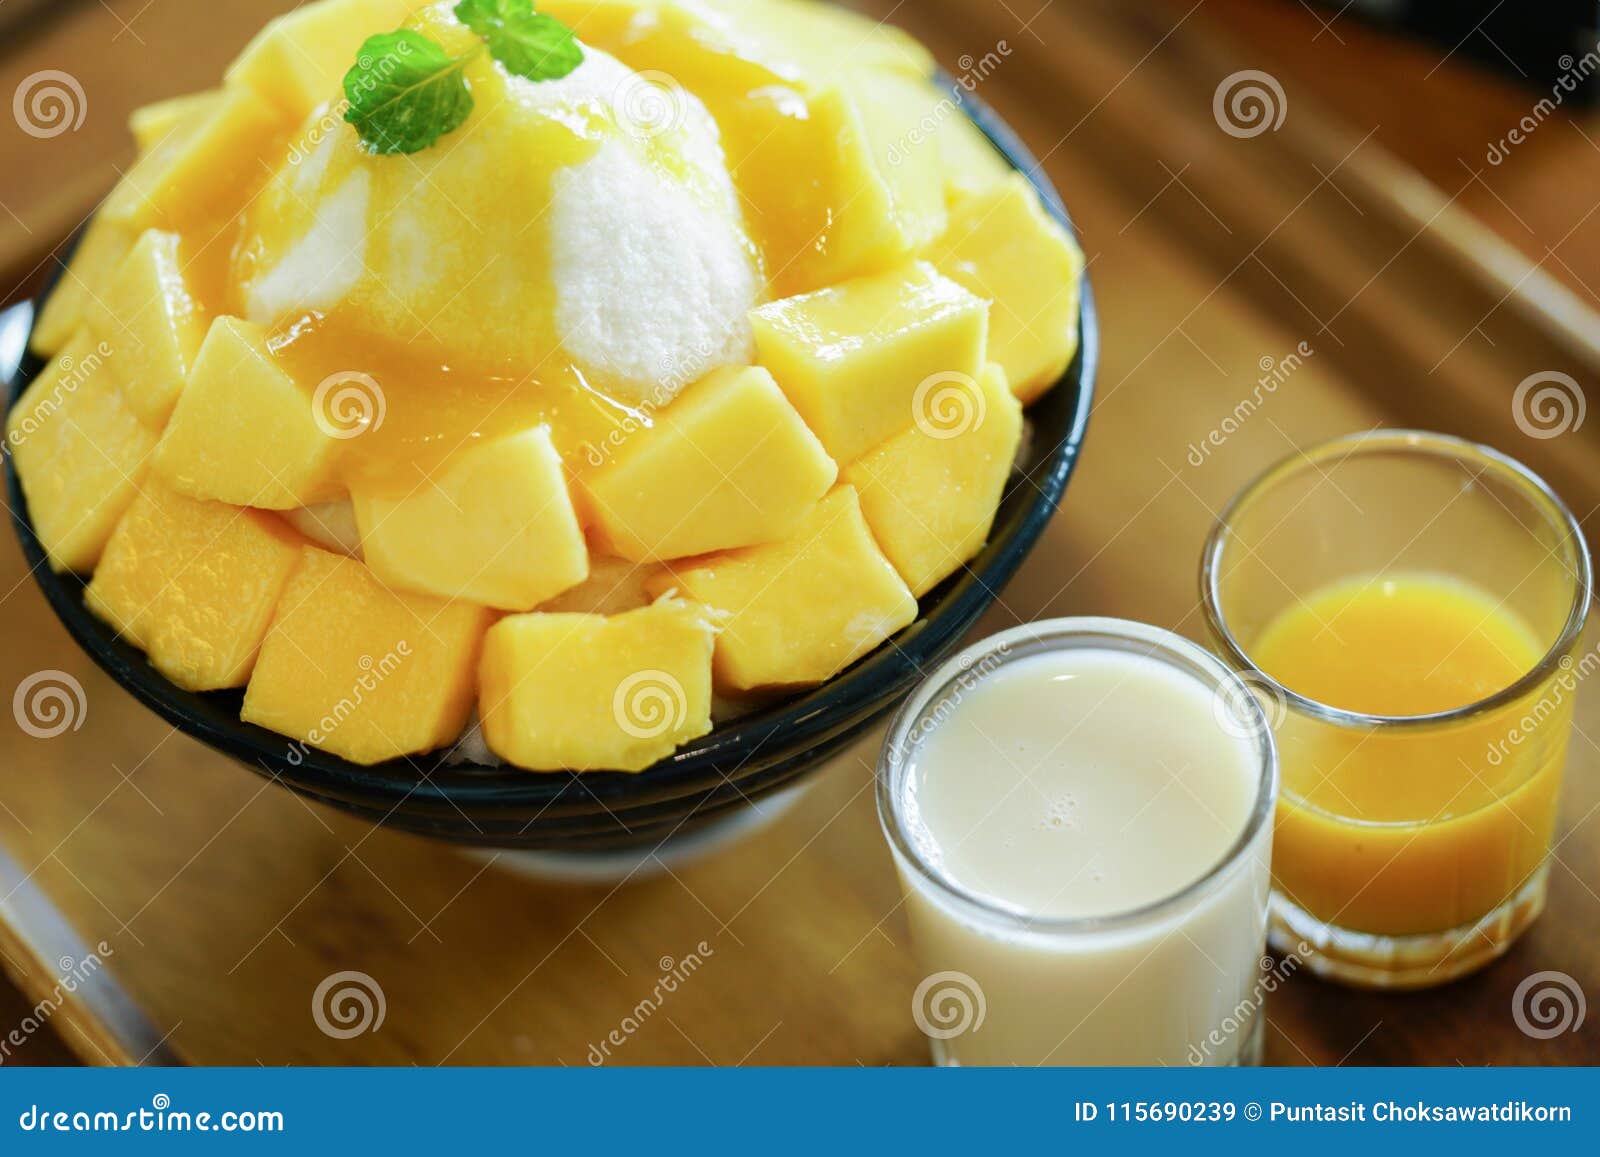 Korean Shaved Milk Ice Topped by Fresh Mango. Stock Image - Image of ...